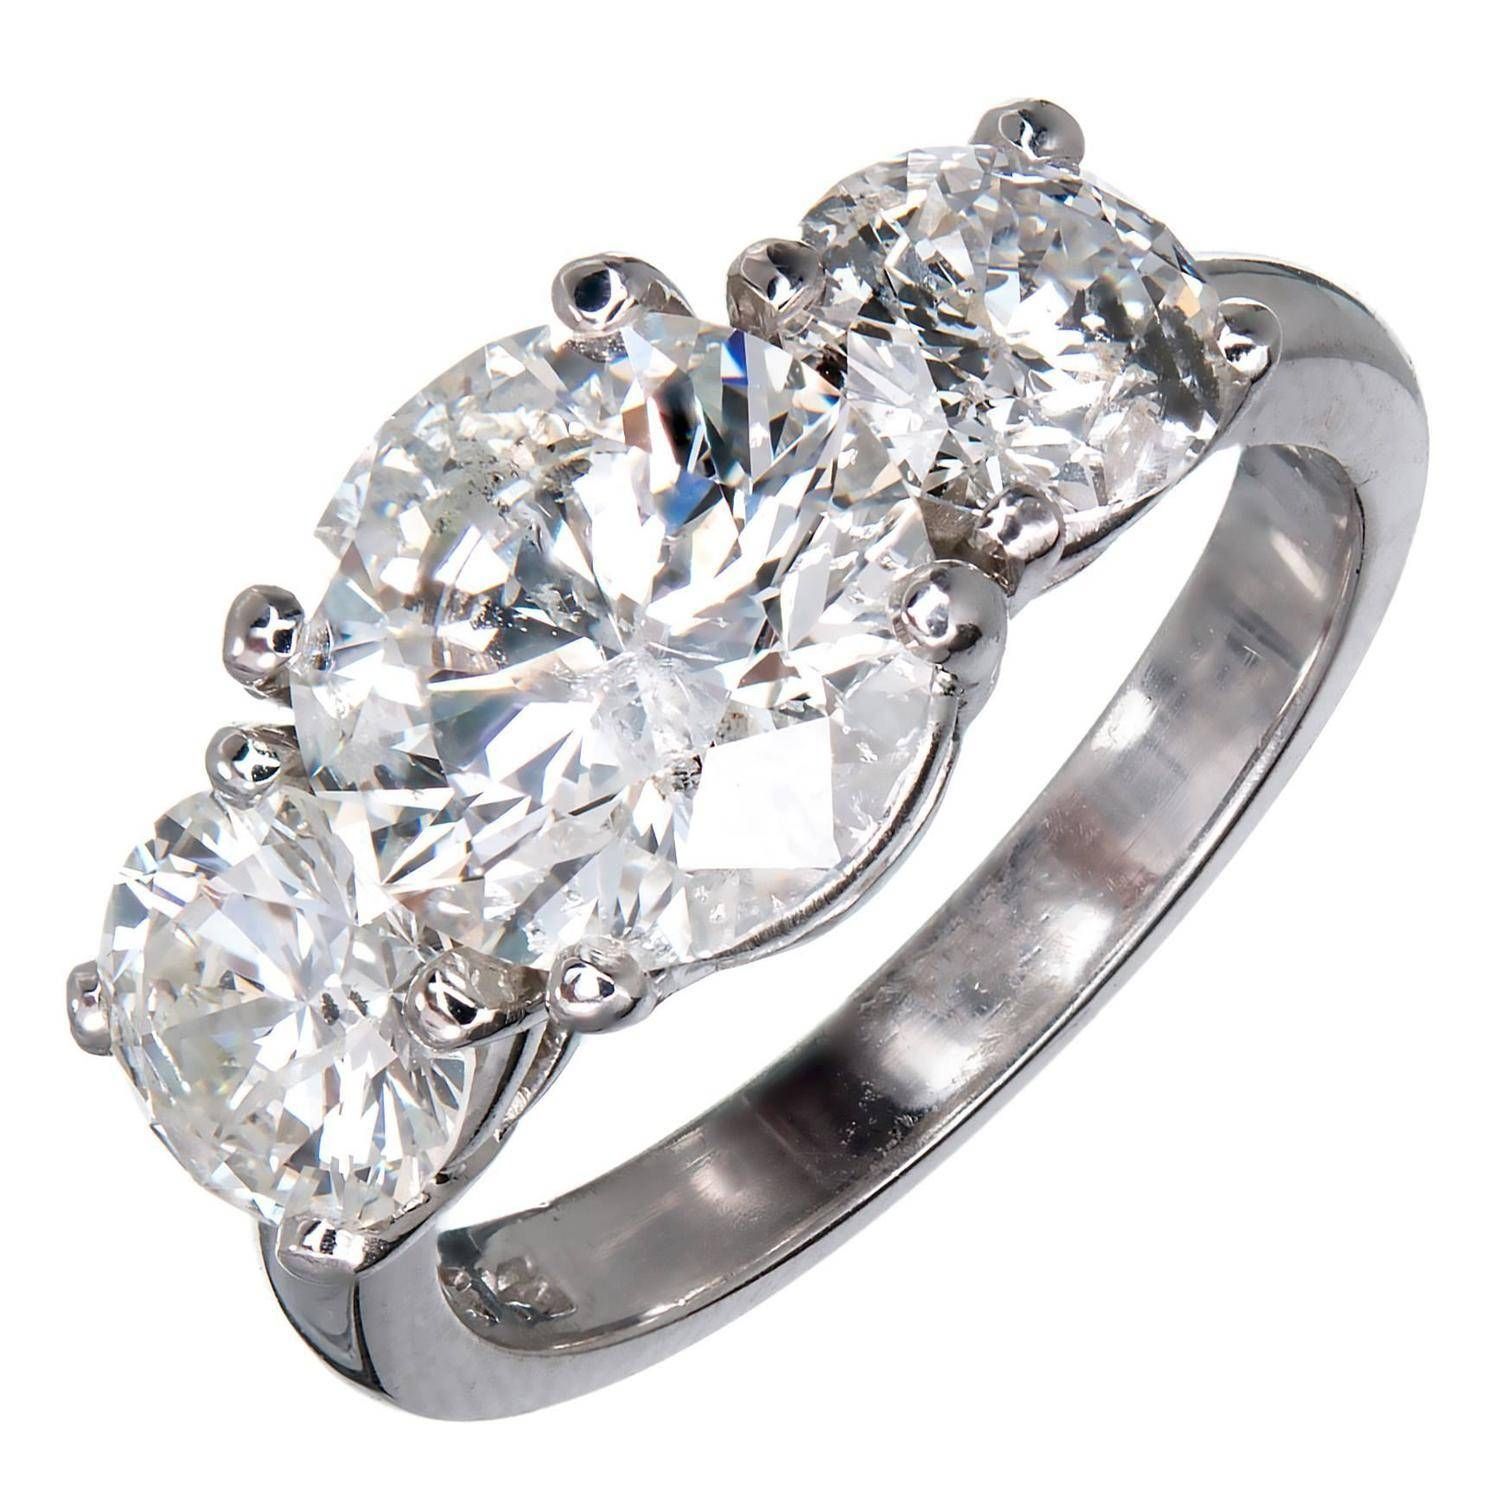 Mg Three Stone Diamond Platinum Engagement Ring For Sale At 1stdibs Regarding Most Recent 3 Stone Diamond Anniversary Rings (View 20 of 25)